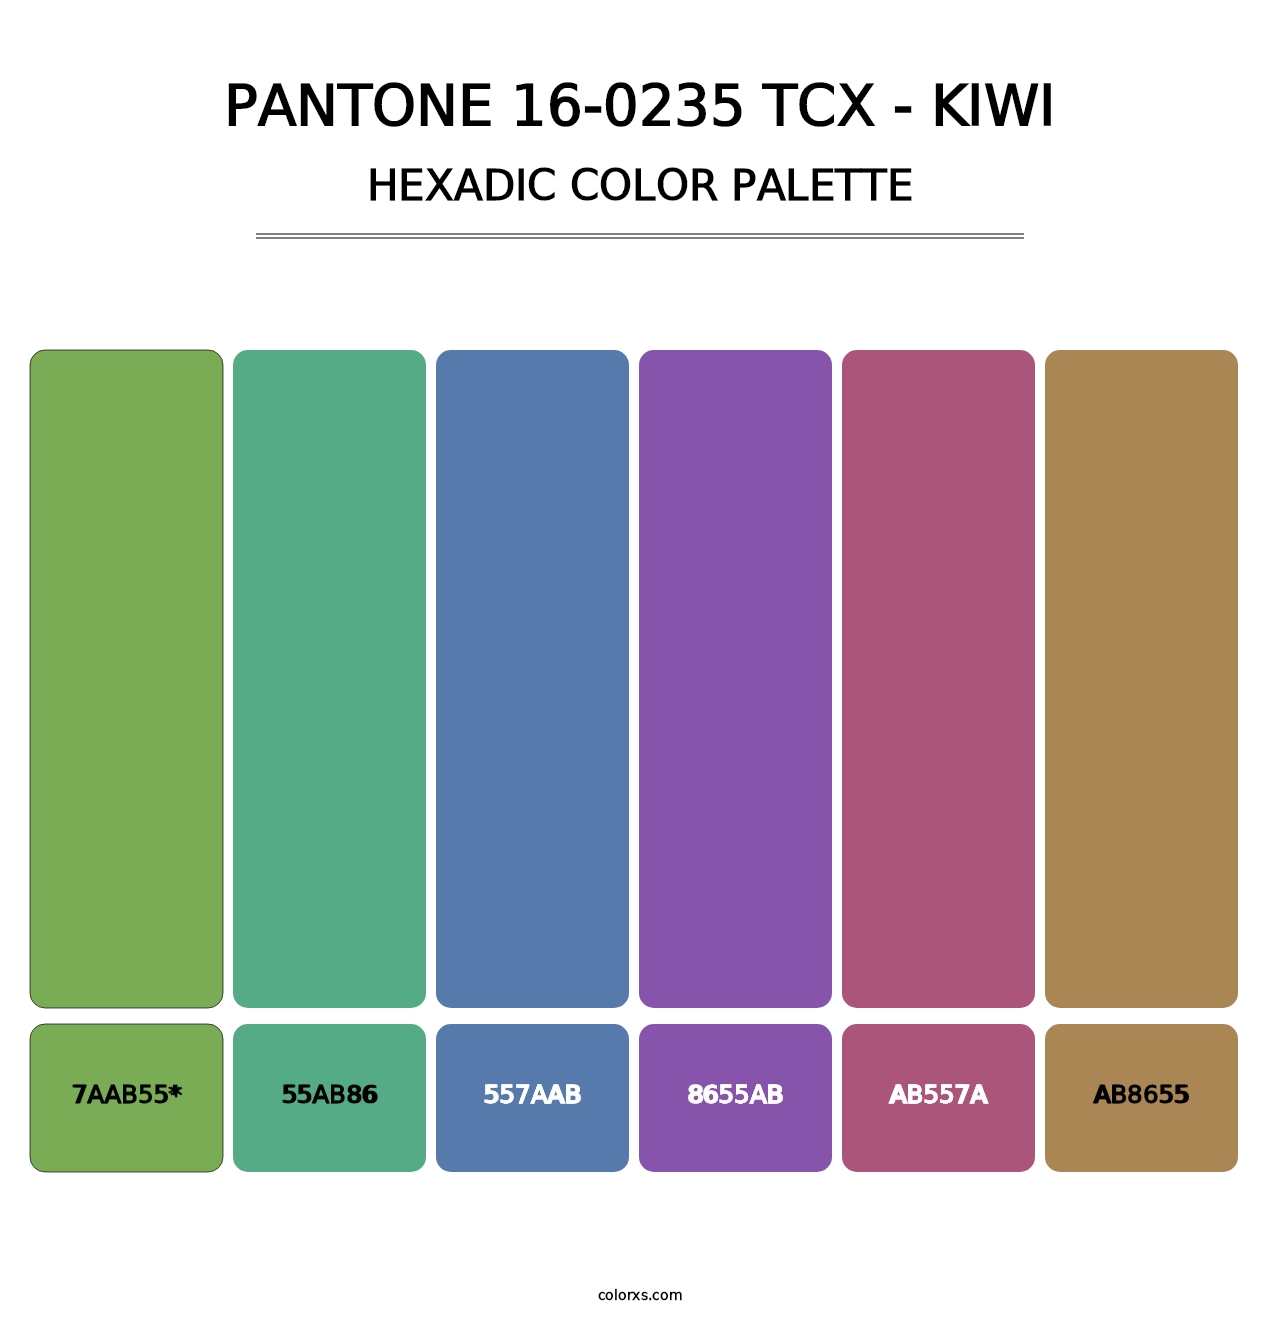 PANTONE 16-0235 TCX - Kiwi - Hexadic Color Palette